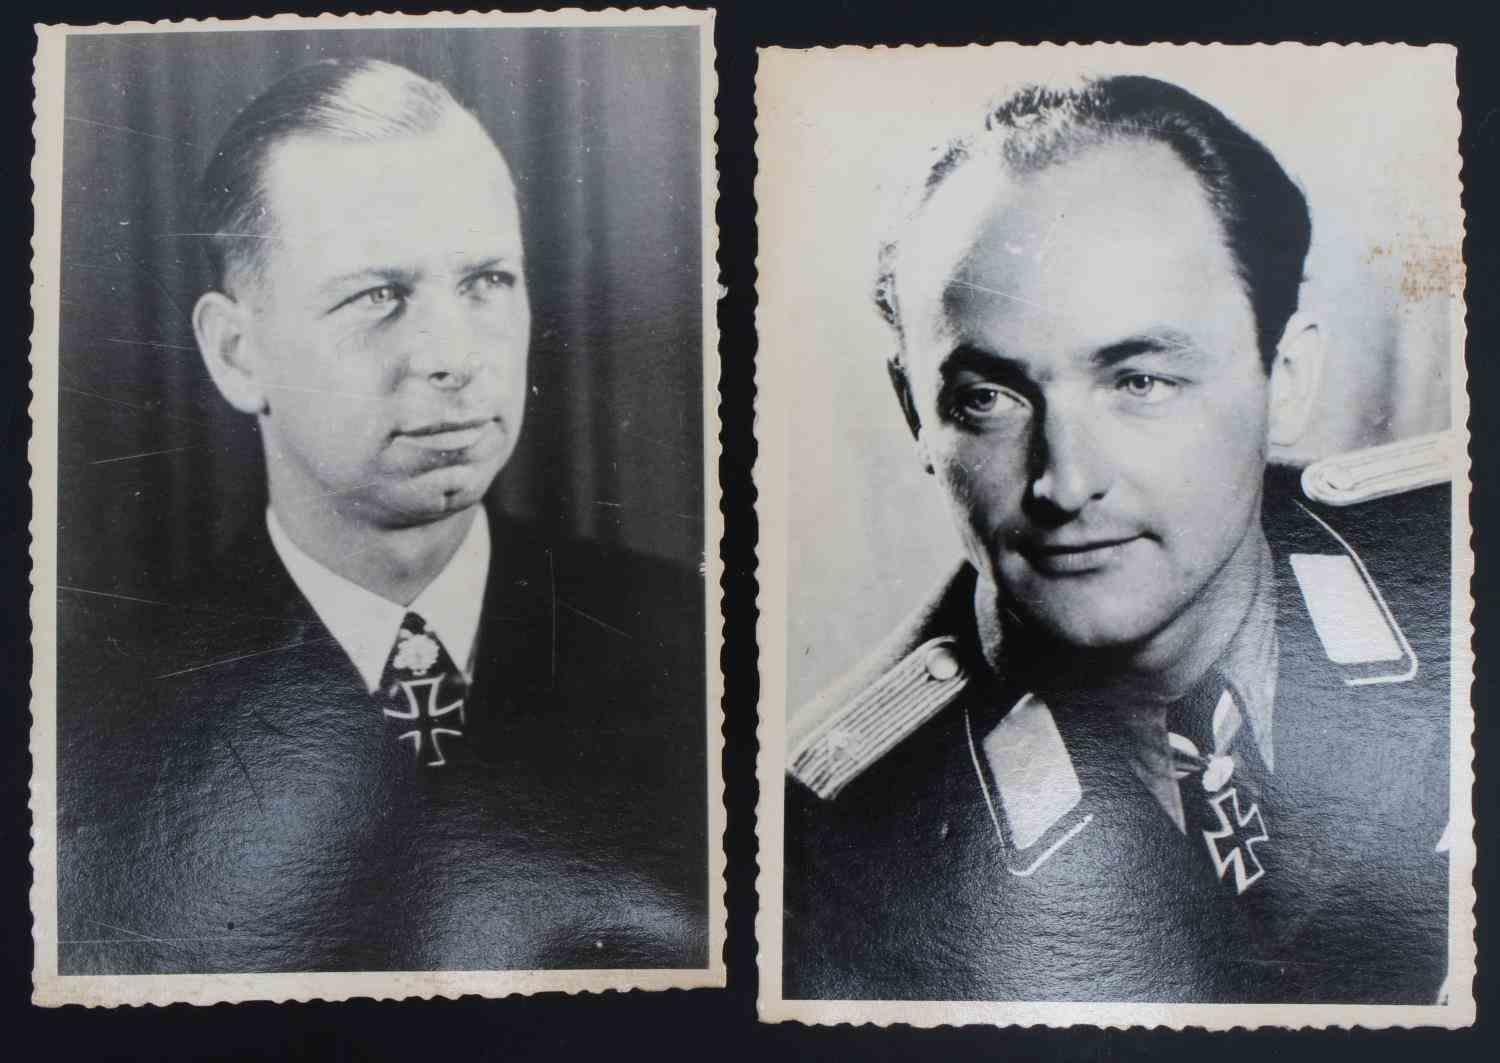 WWII GERMAN KNIGHTS CROSS WINNER PHOTOGRAPHS LOT